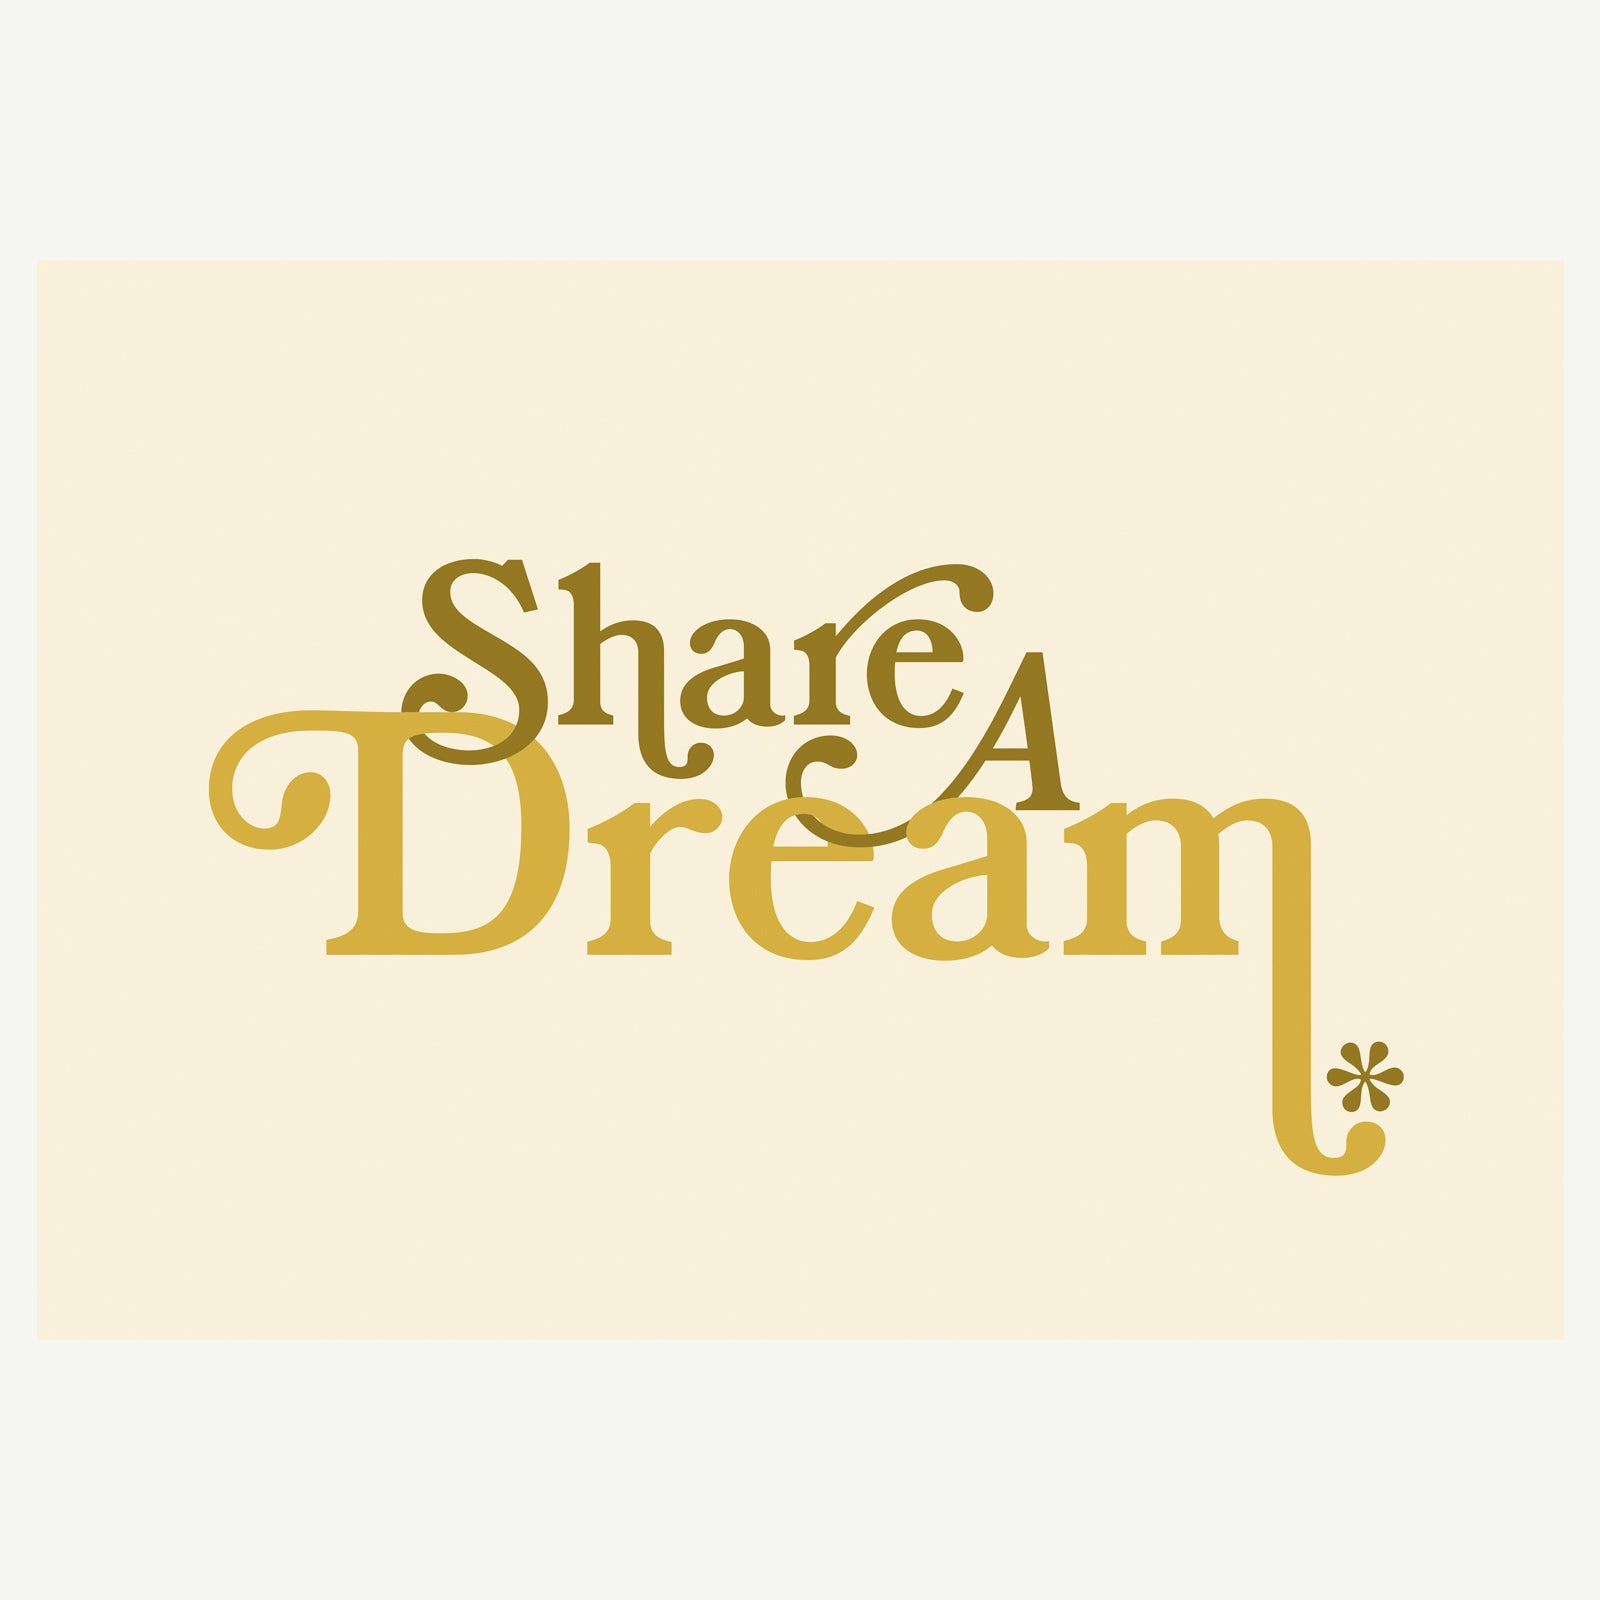 Share a Dream Digital Art Download